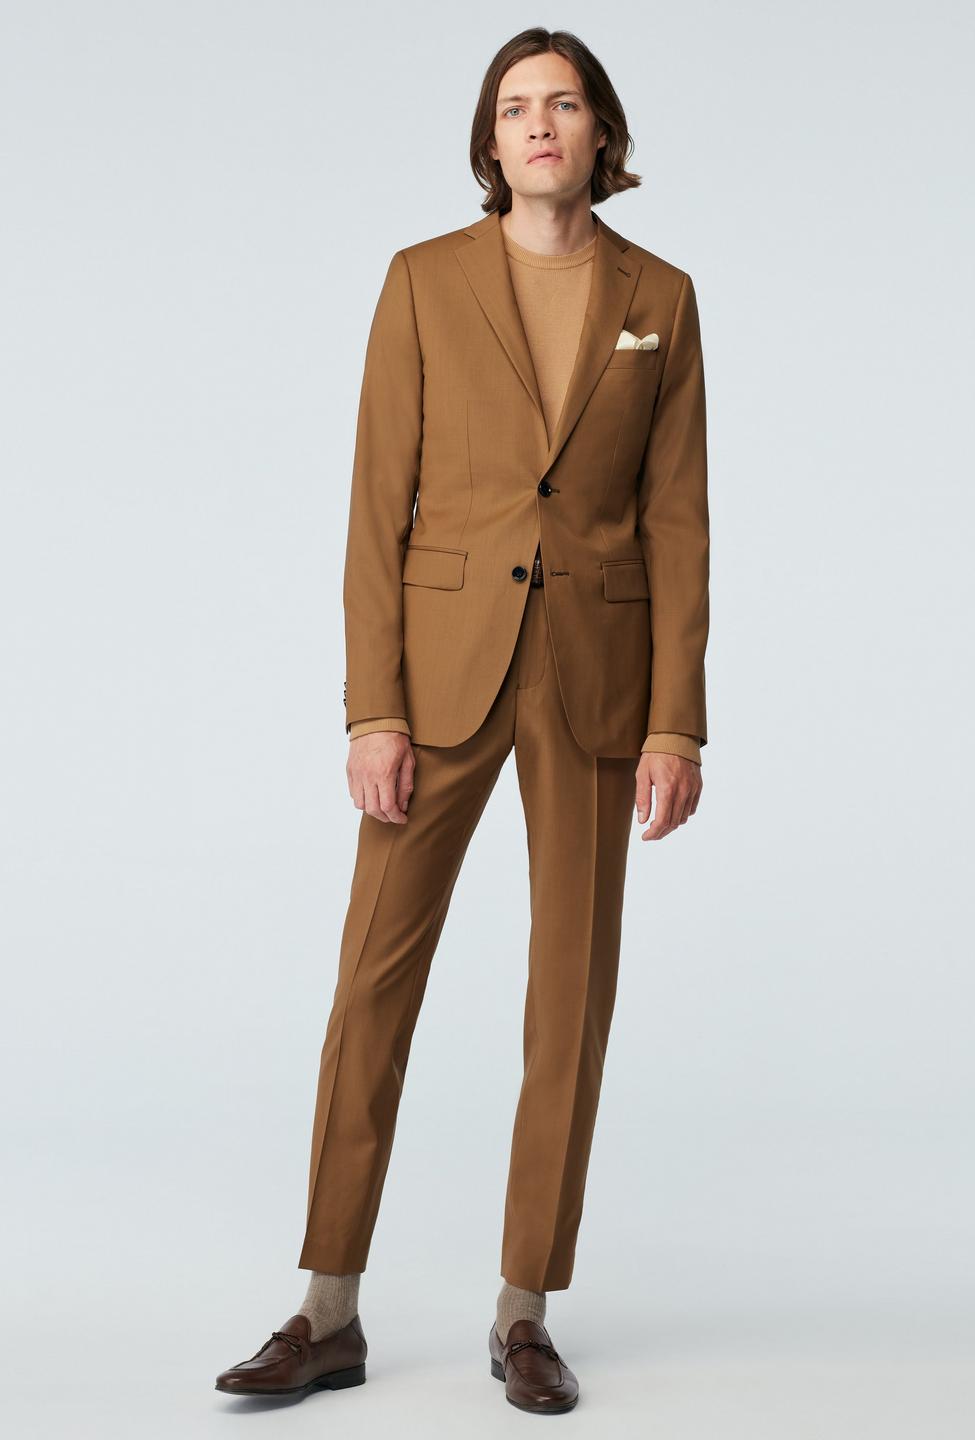 Milano Light Brown Suit